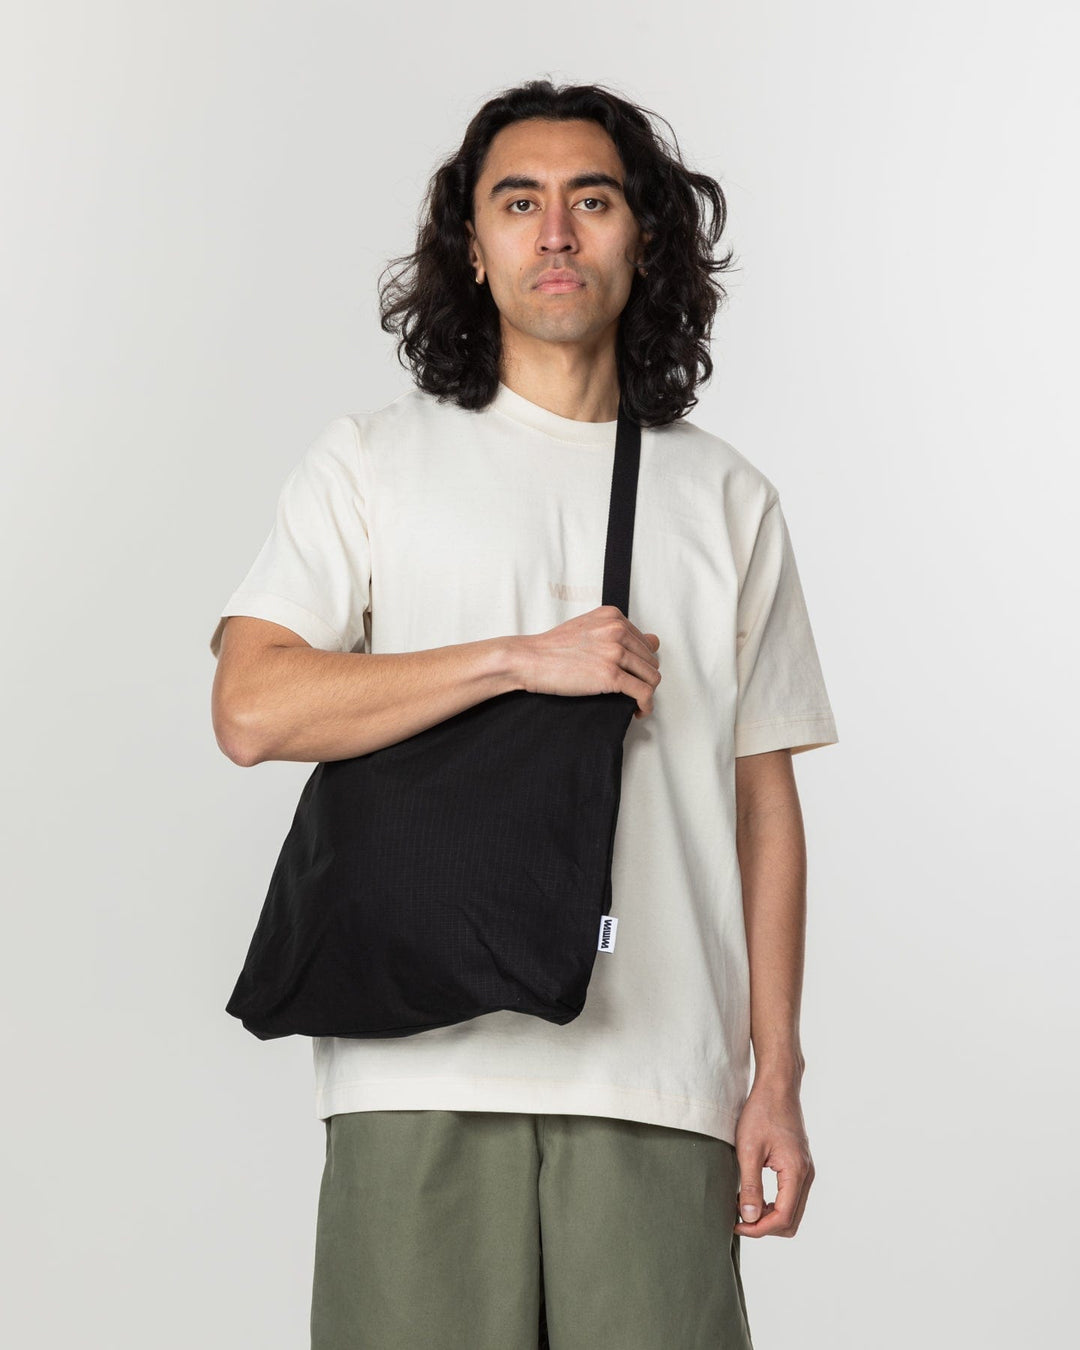 Water Resistant Messenger Bag - Black